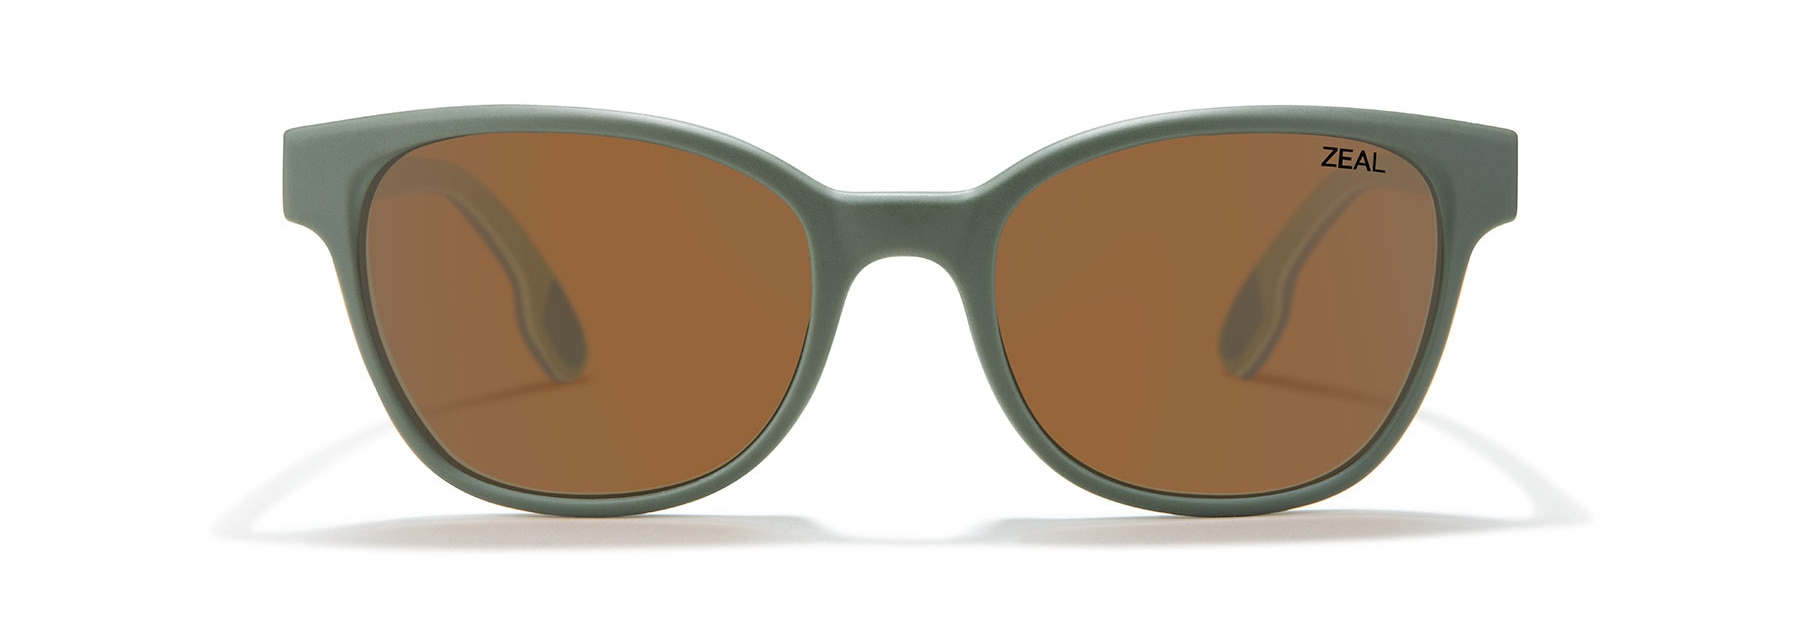 Shop AVON (Z1846) Sunglasses by Zeal | Zeal Optics